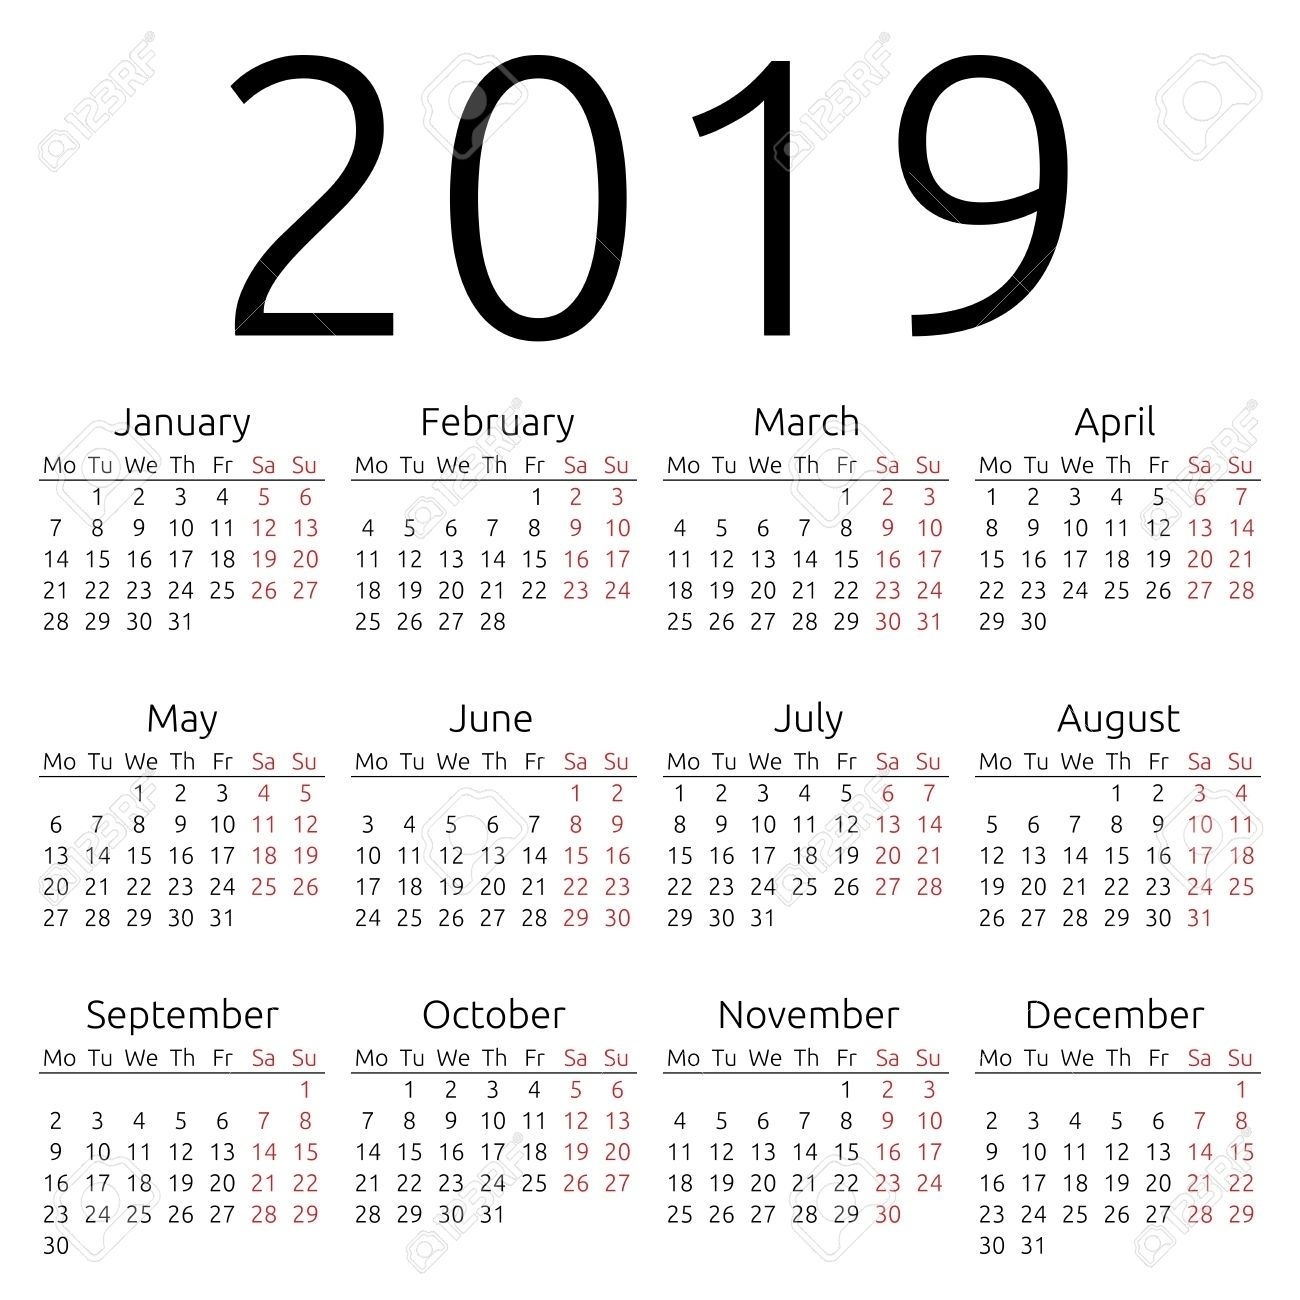 Incredible Calendar Hong Kong With Holiday Print In 2020 Calendar Template Hong Kong